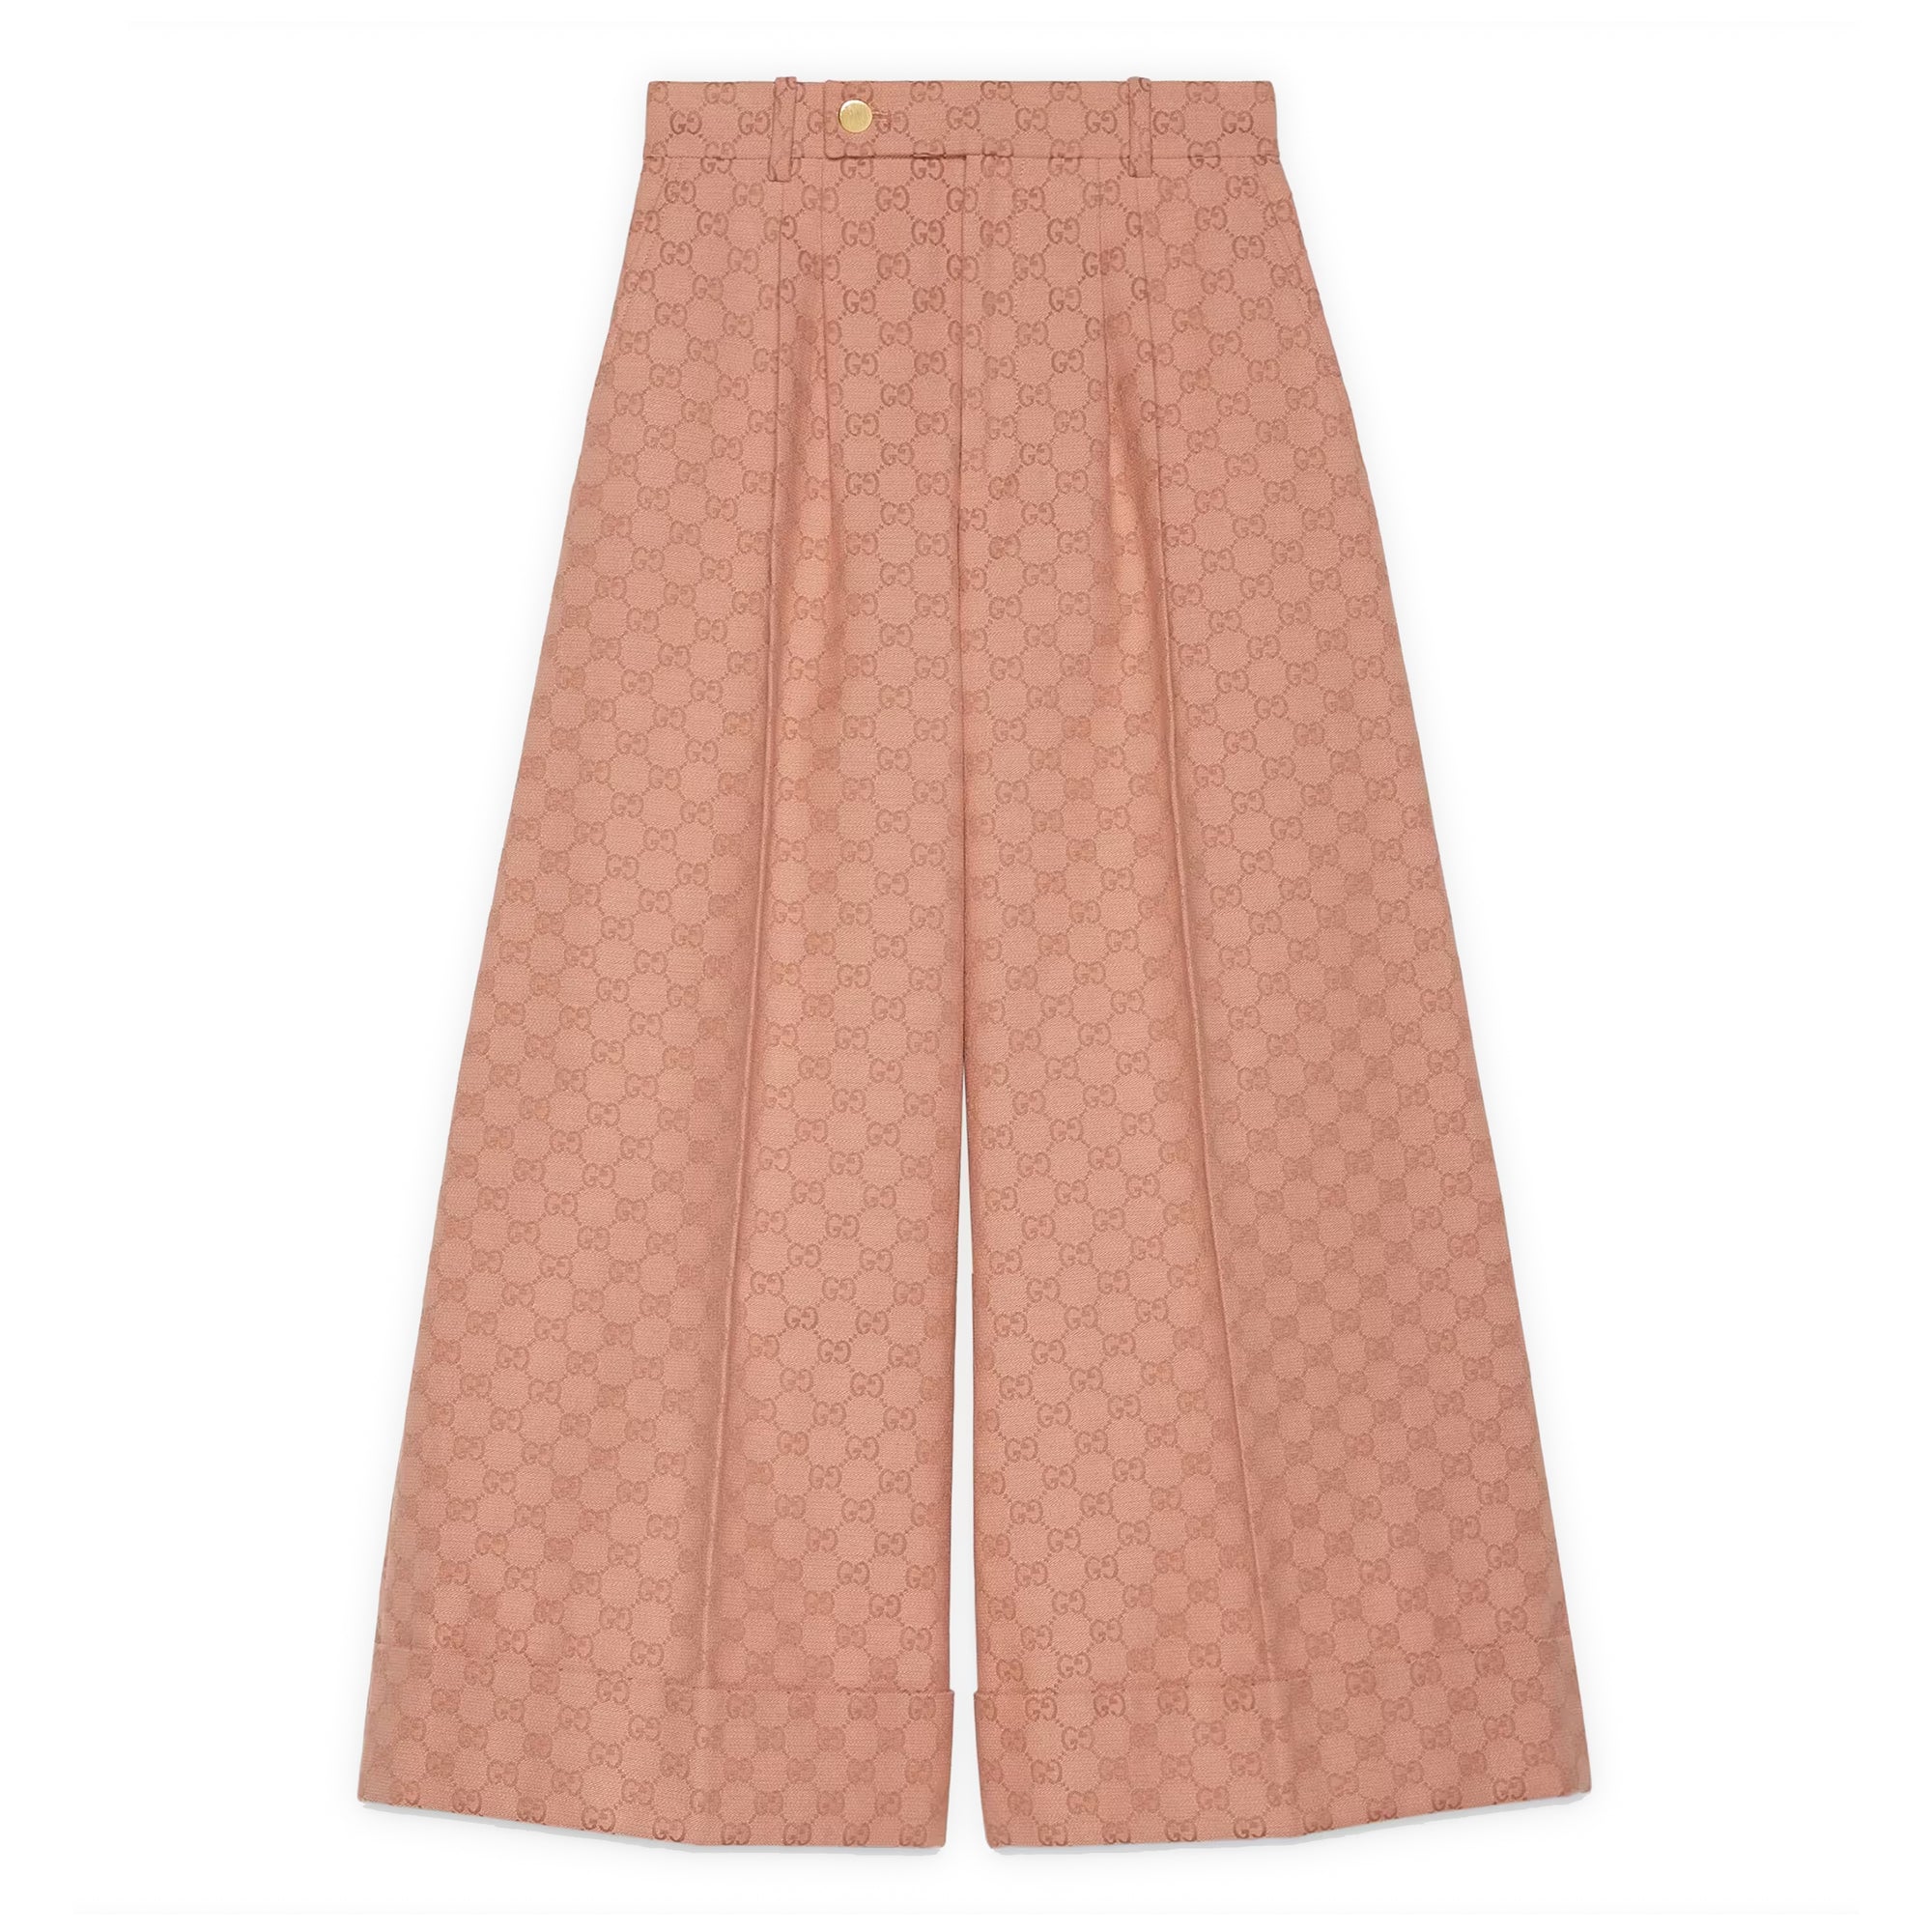 Gucci - Women’s GG Cotton Canvas Trouser - (Light Pink) view 1